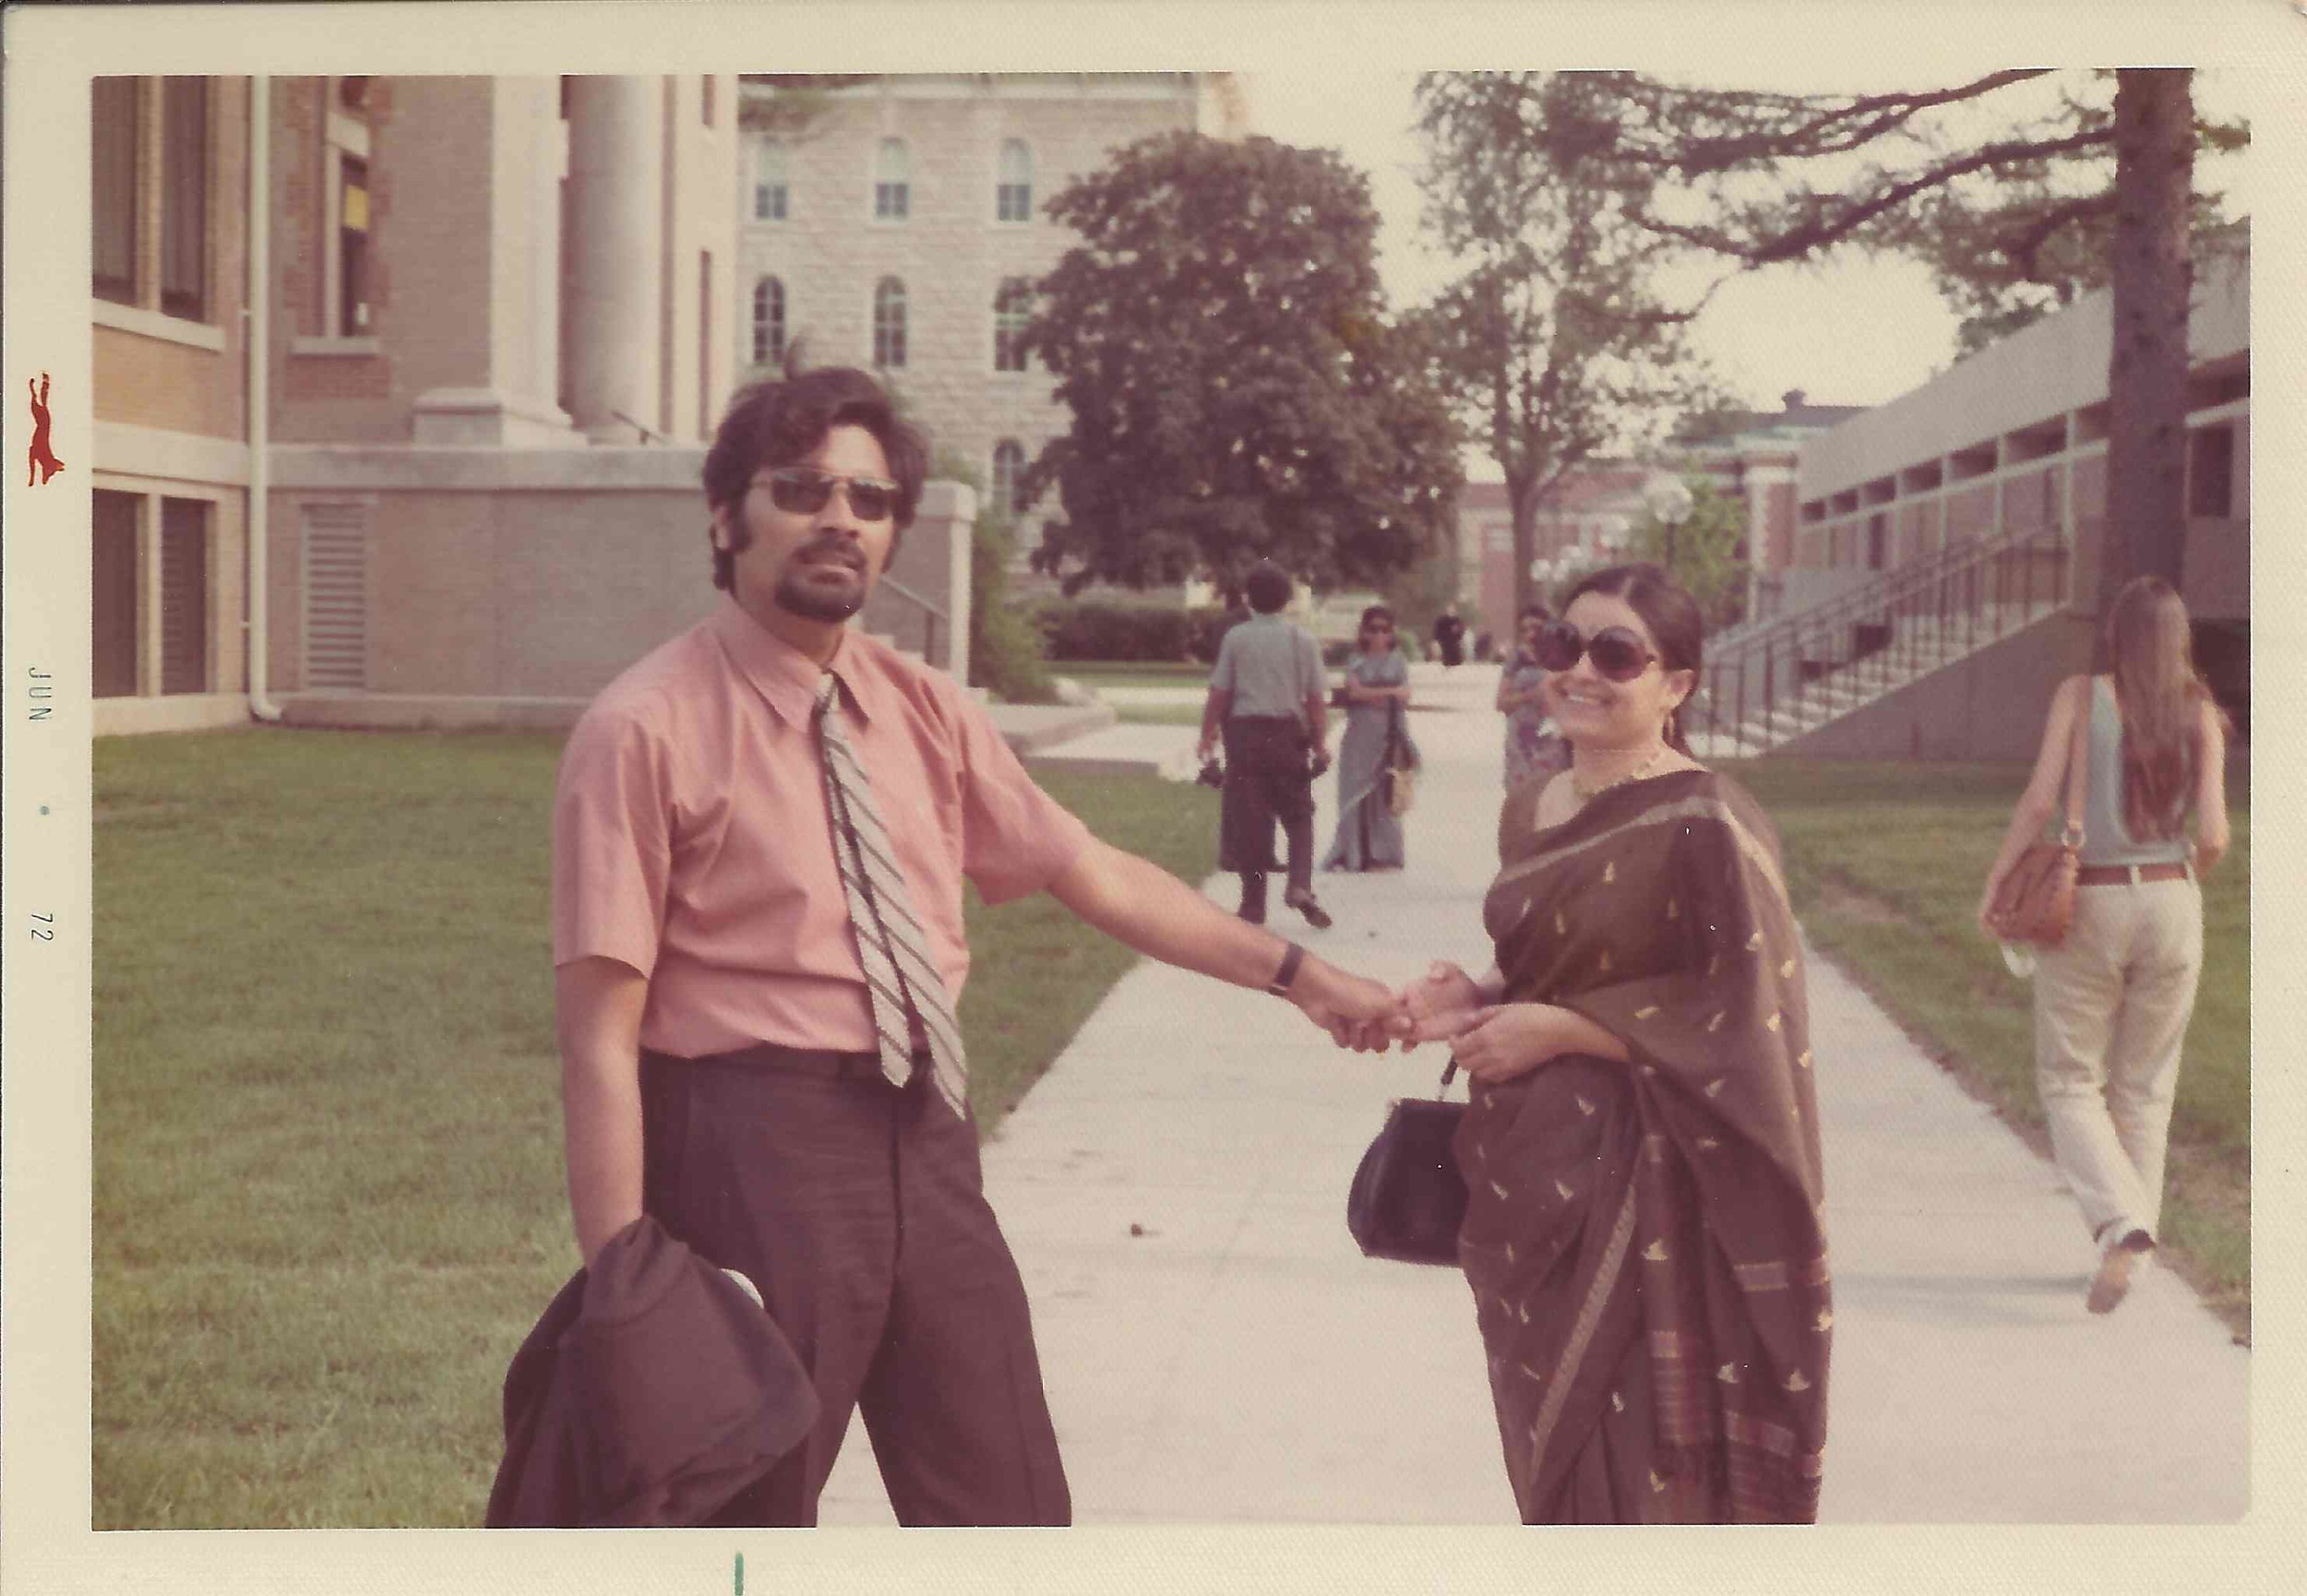 Sam and Anu at college campus, 1972